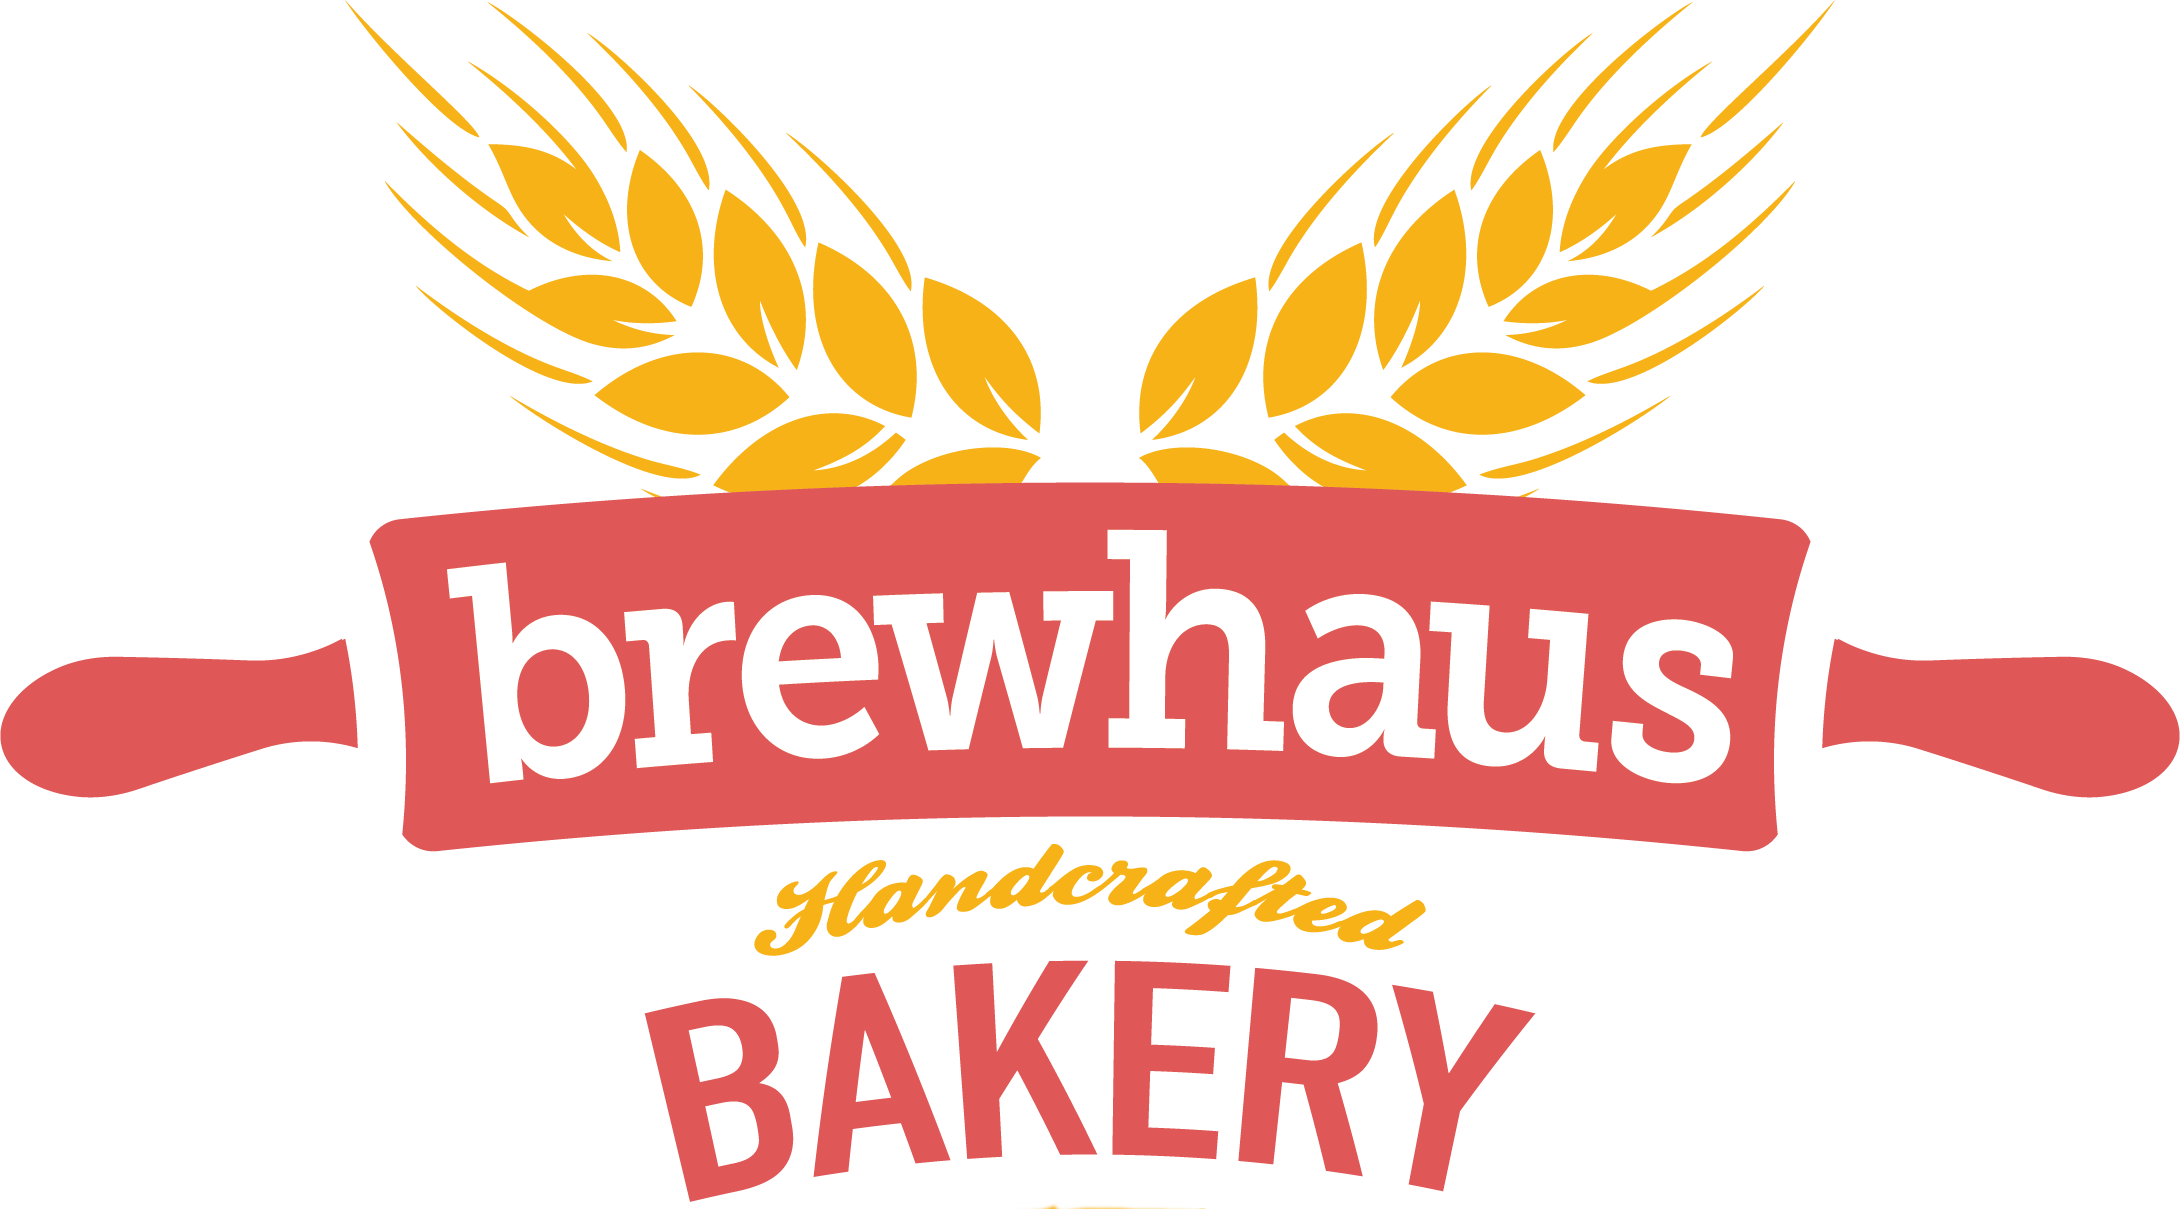 Brewhaus Bakery